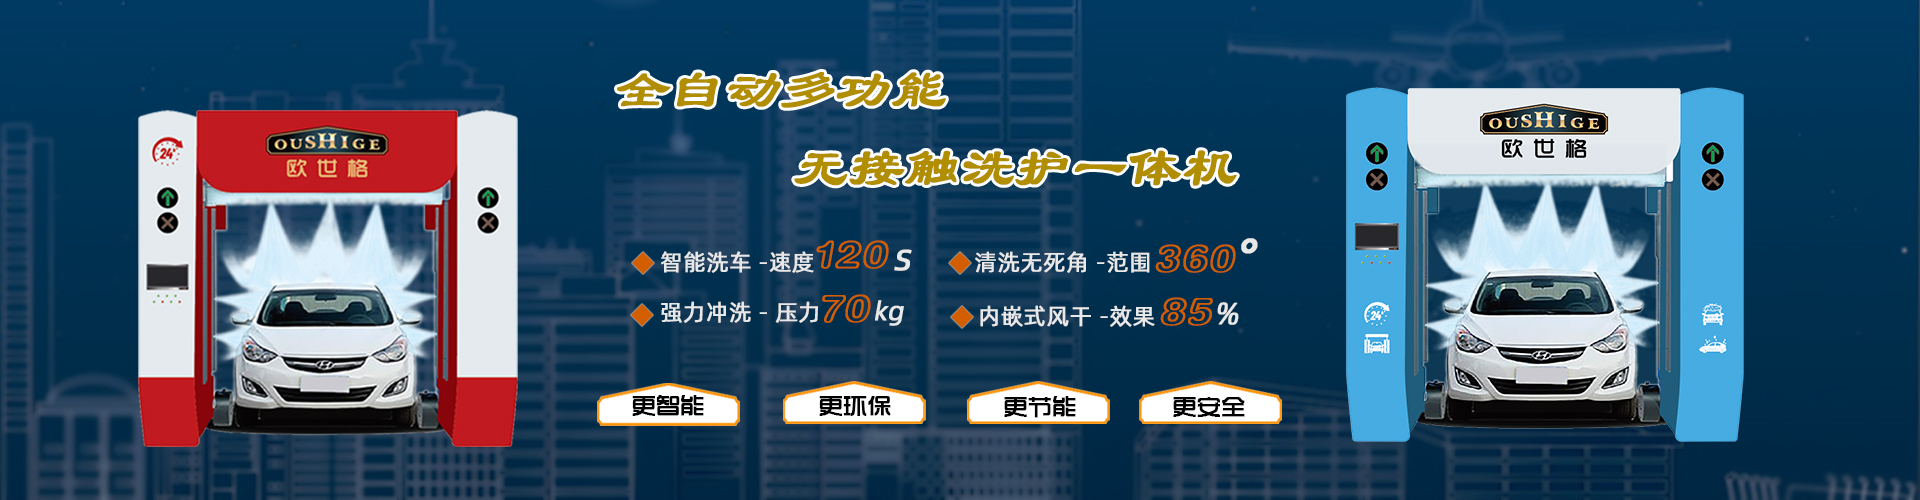 leyu乐鱼官网:自动洗车设备价格一览表